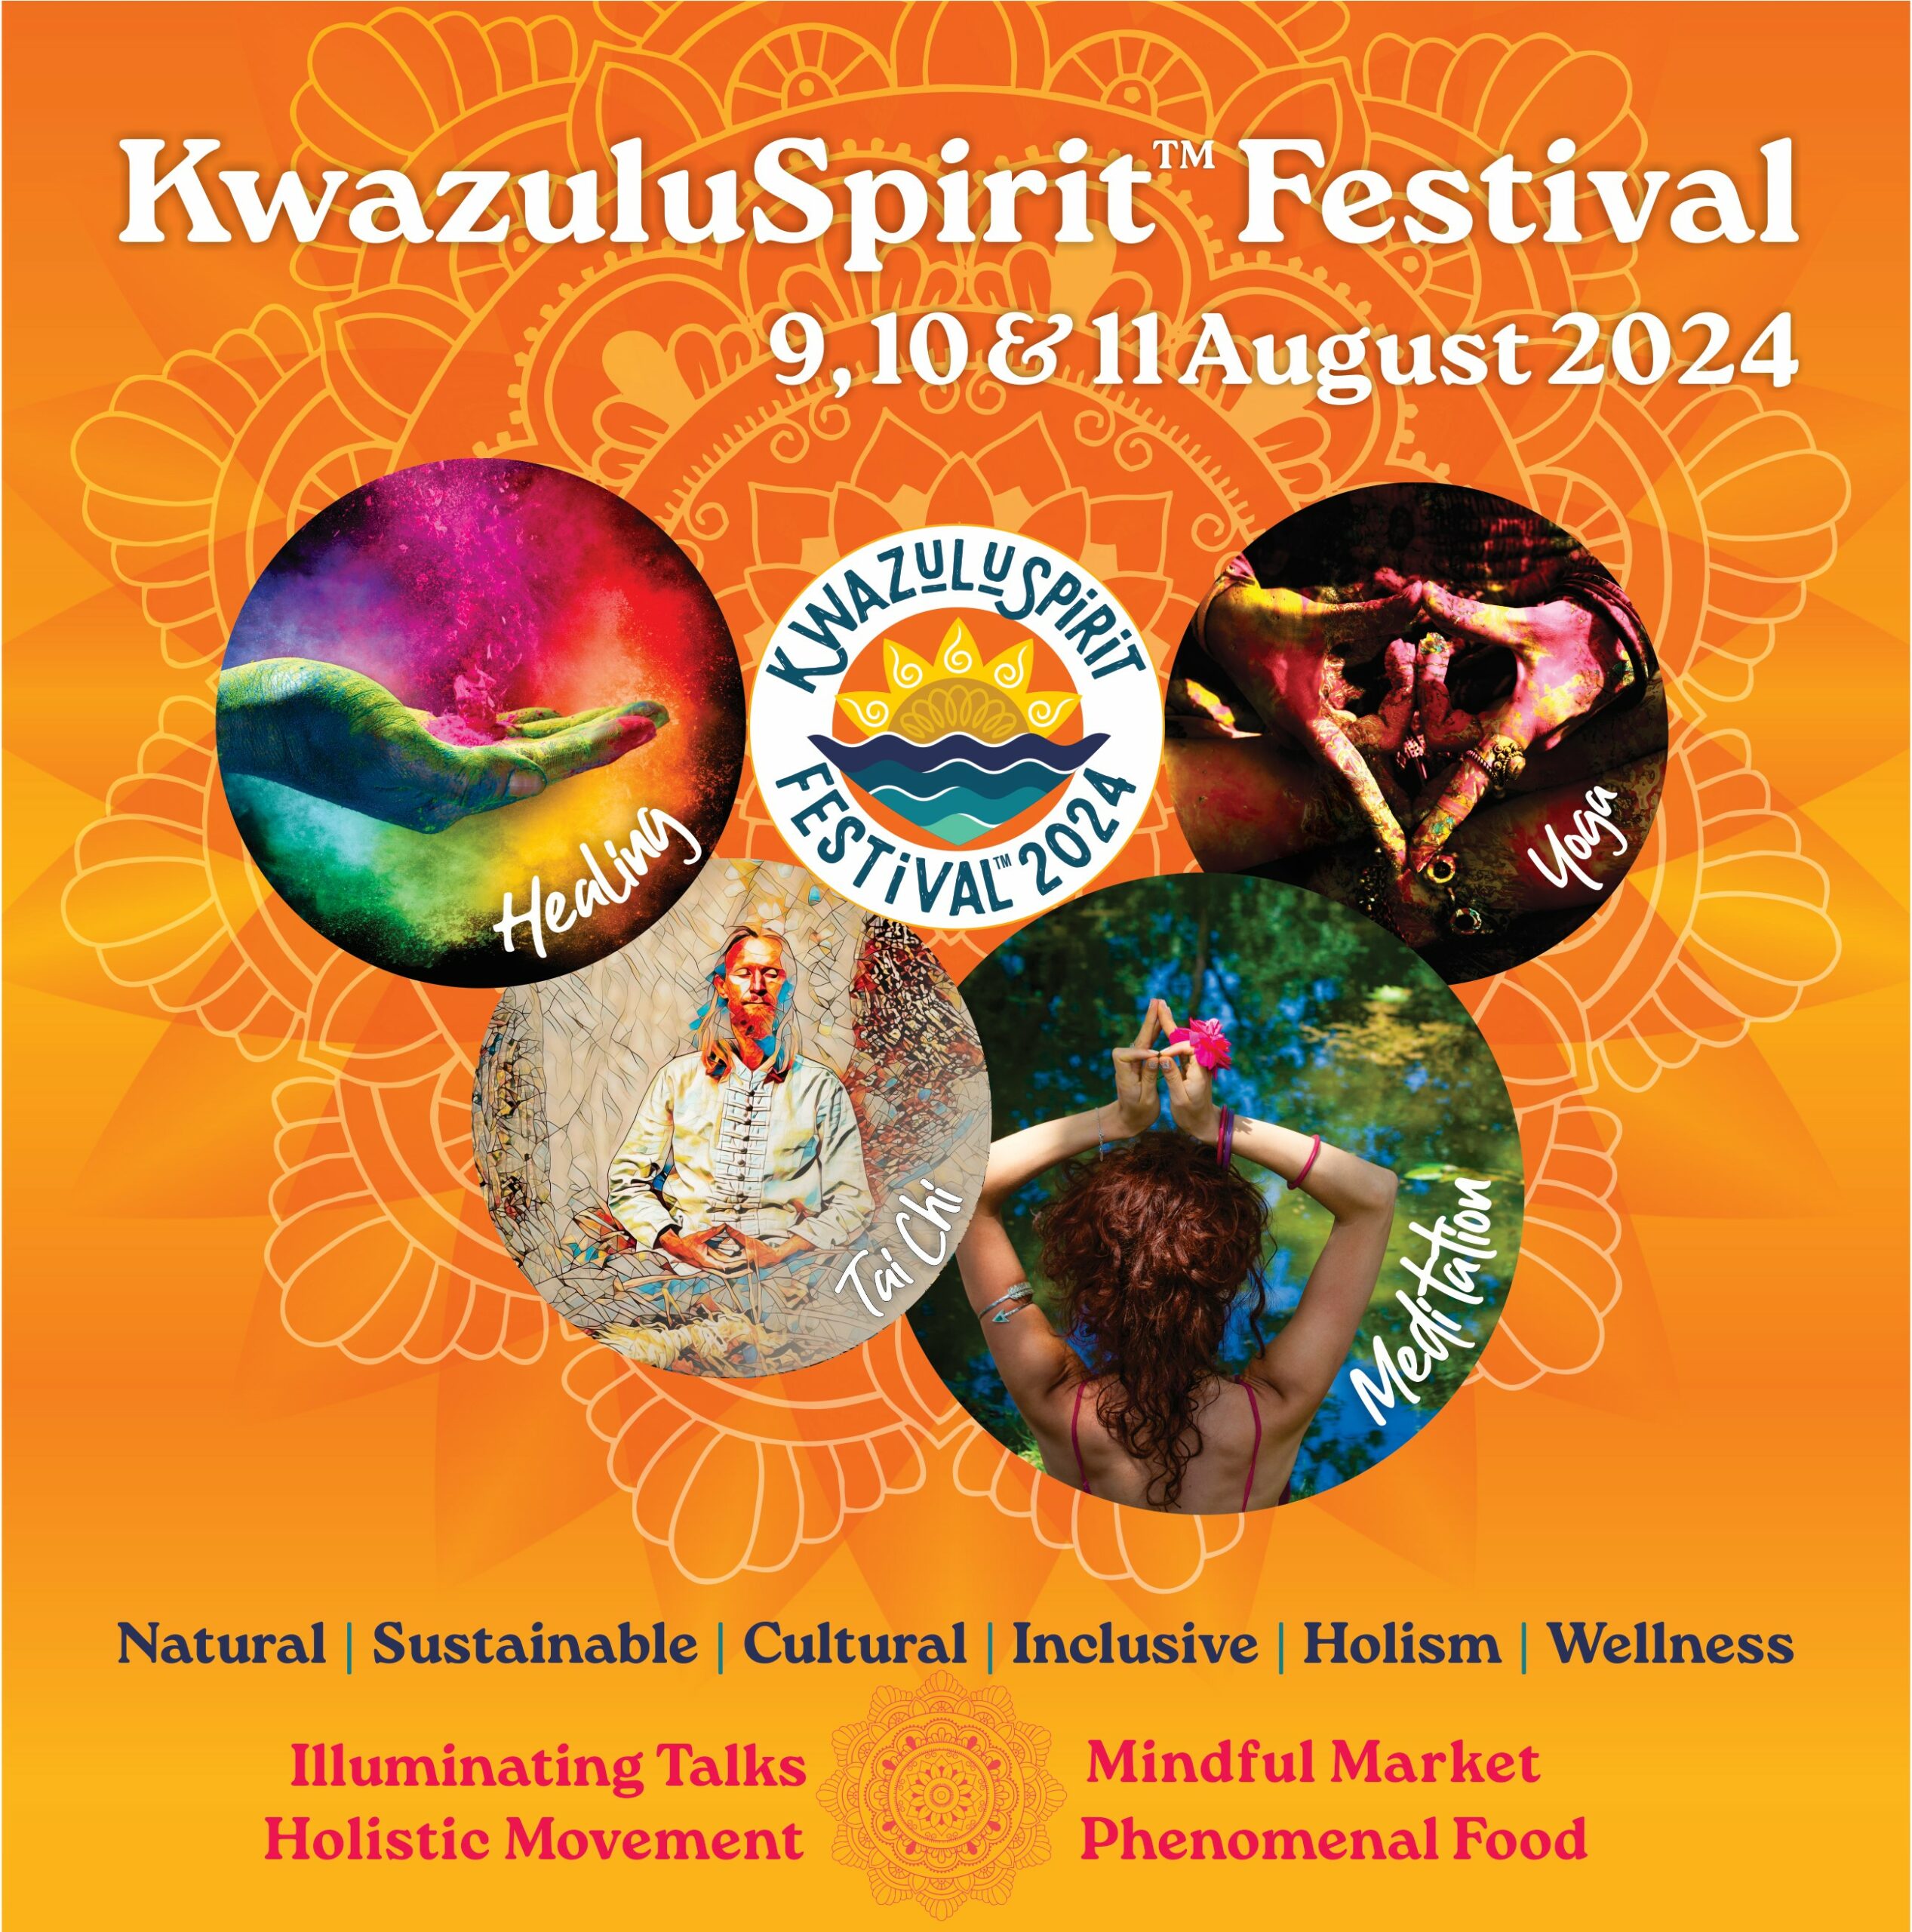 Kwazuluspirit Festival Sprirt fest 2024